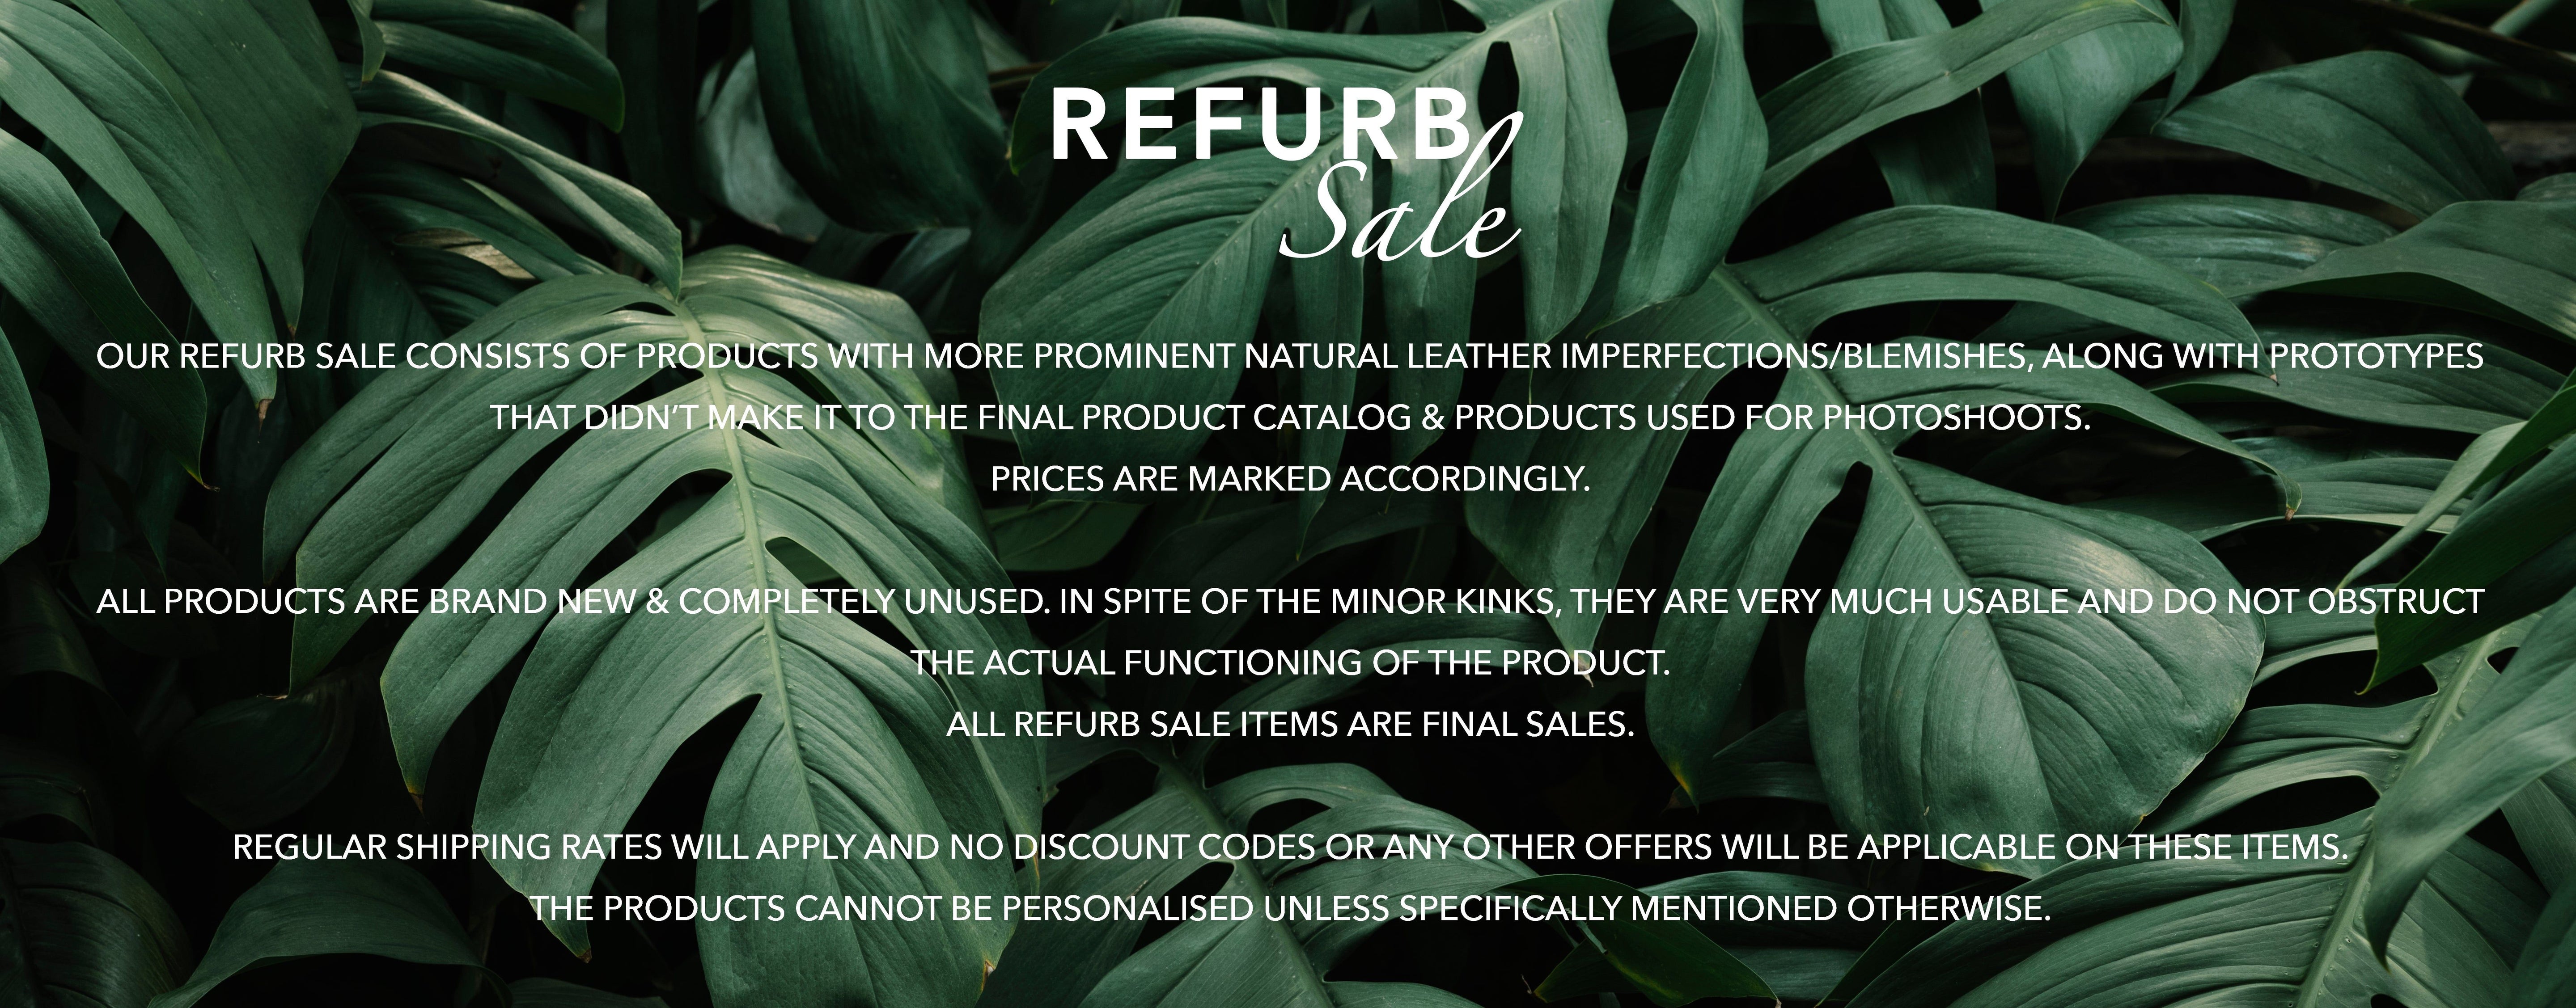 Refurb Sale - The Black Canvas